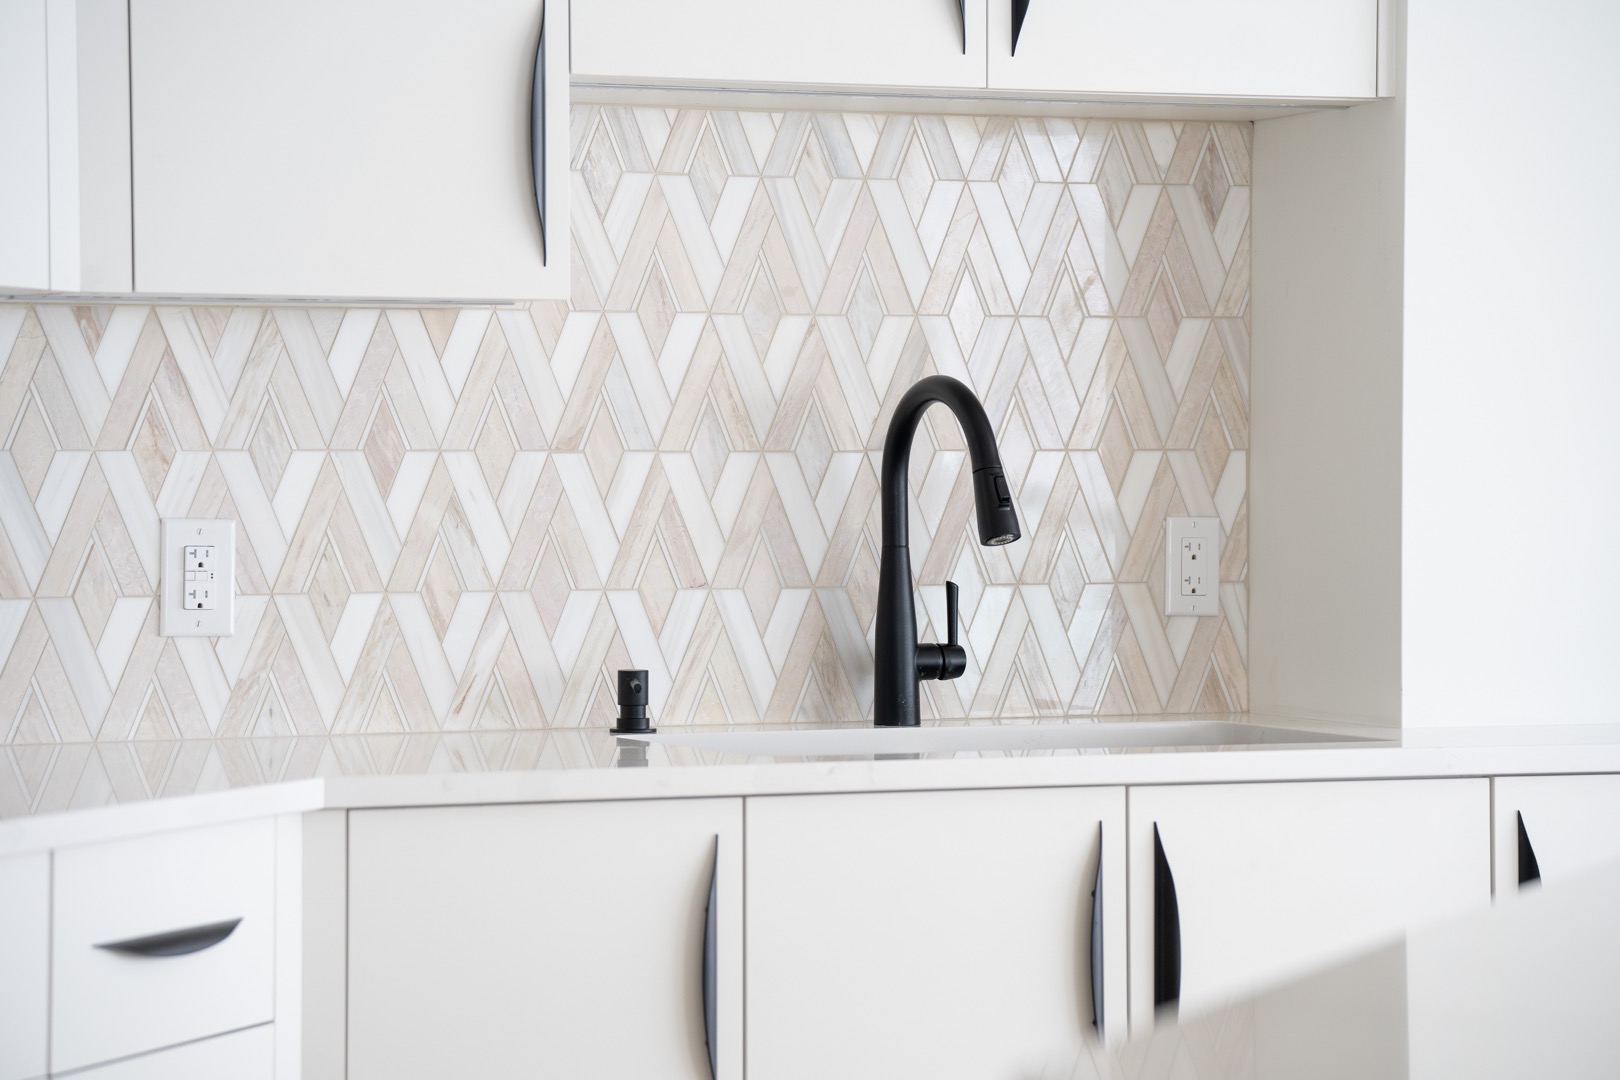 kitchen cabinets with patterned backsplash and sink